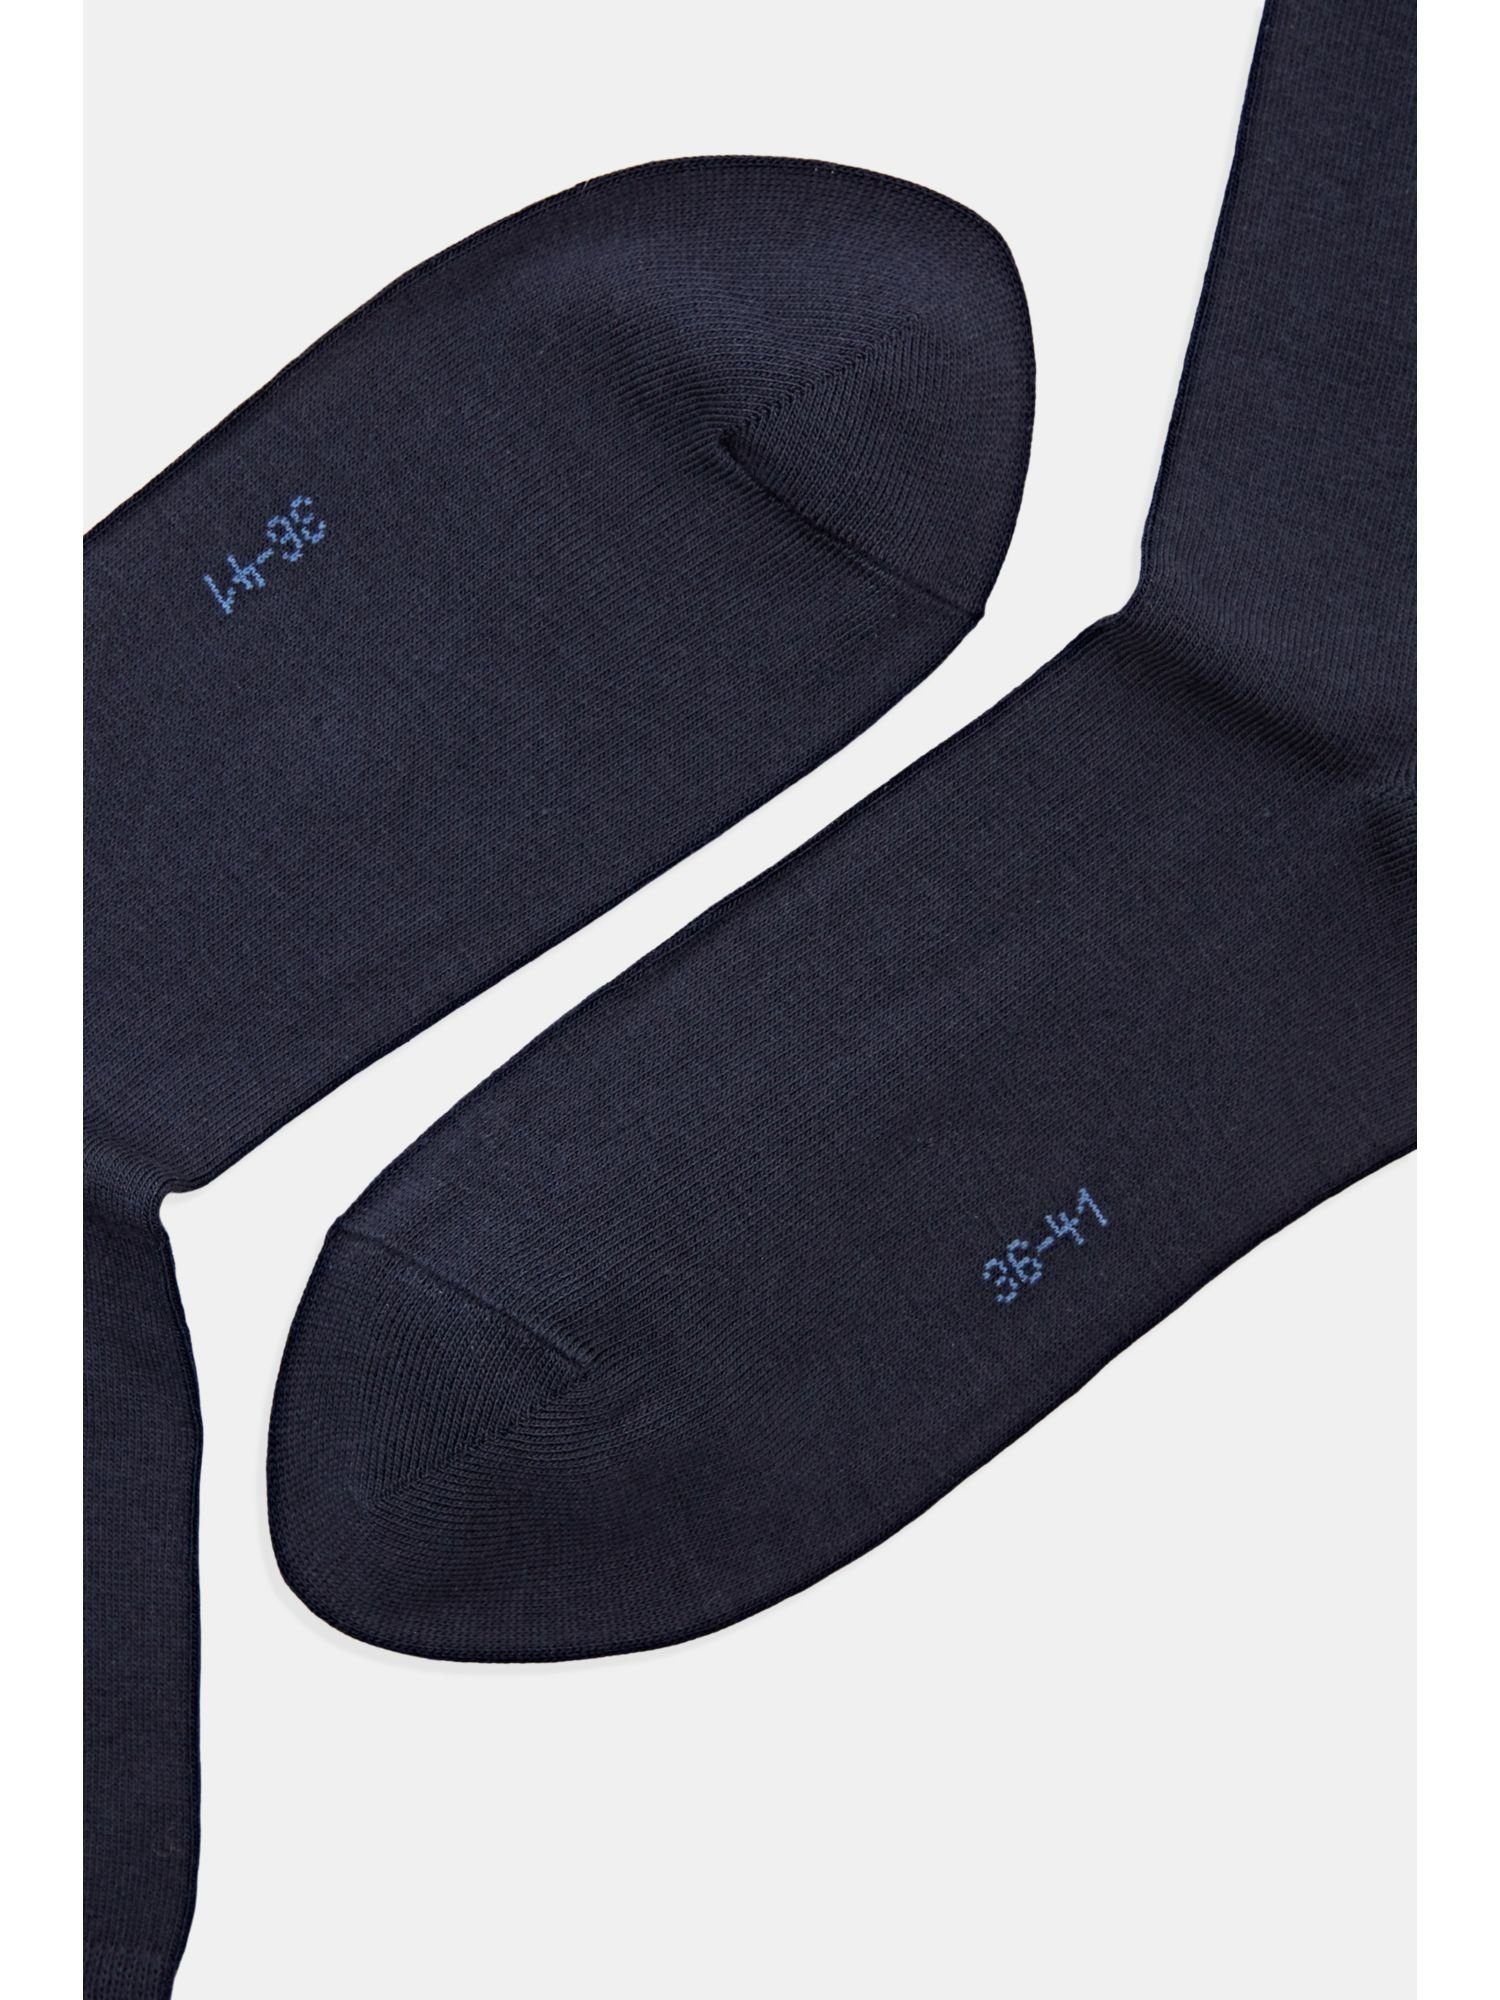 Socken, unifarbene MARINE 5er-Pack Socken Bio-Baumwolle Esprit